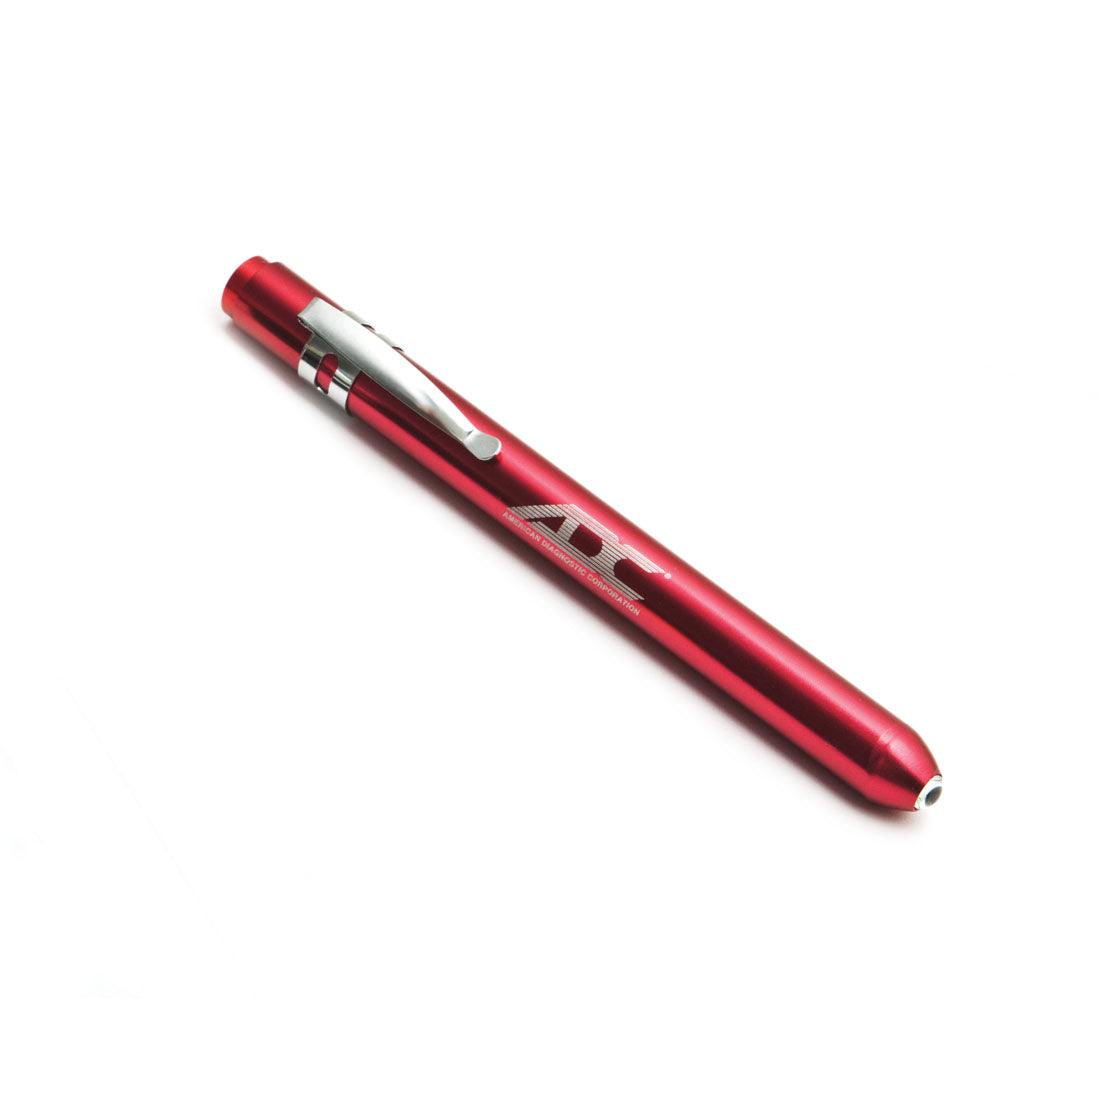 METALITE Reusable Pupil Gauge Penlight Pen Light ADC Red  